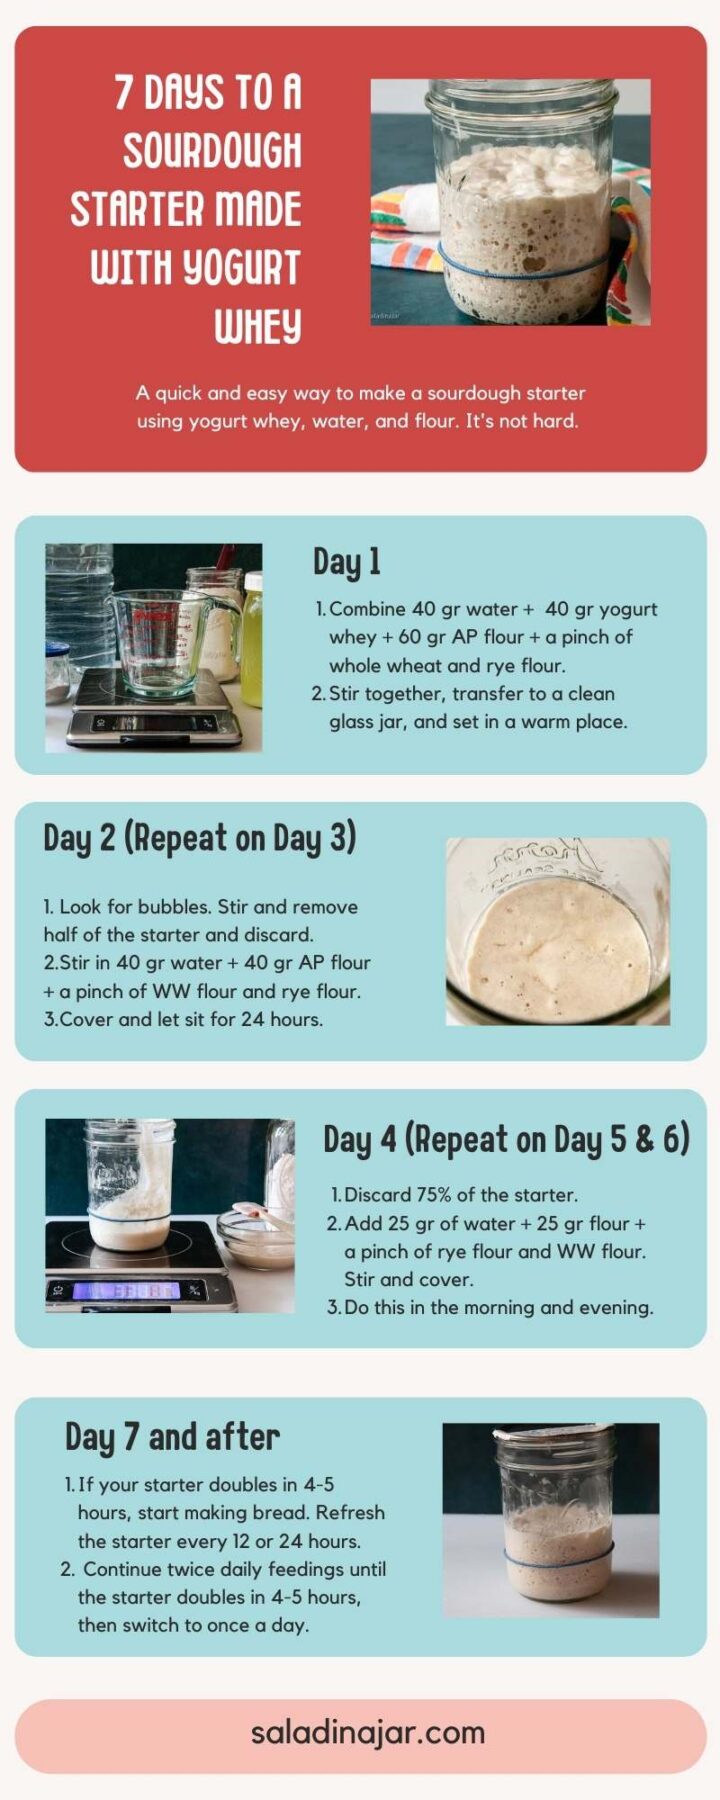 infographic about making a sourdough starter using yogurt whey.